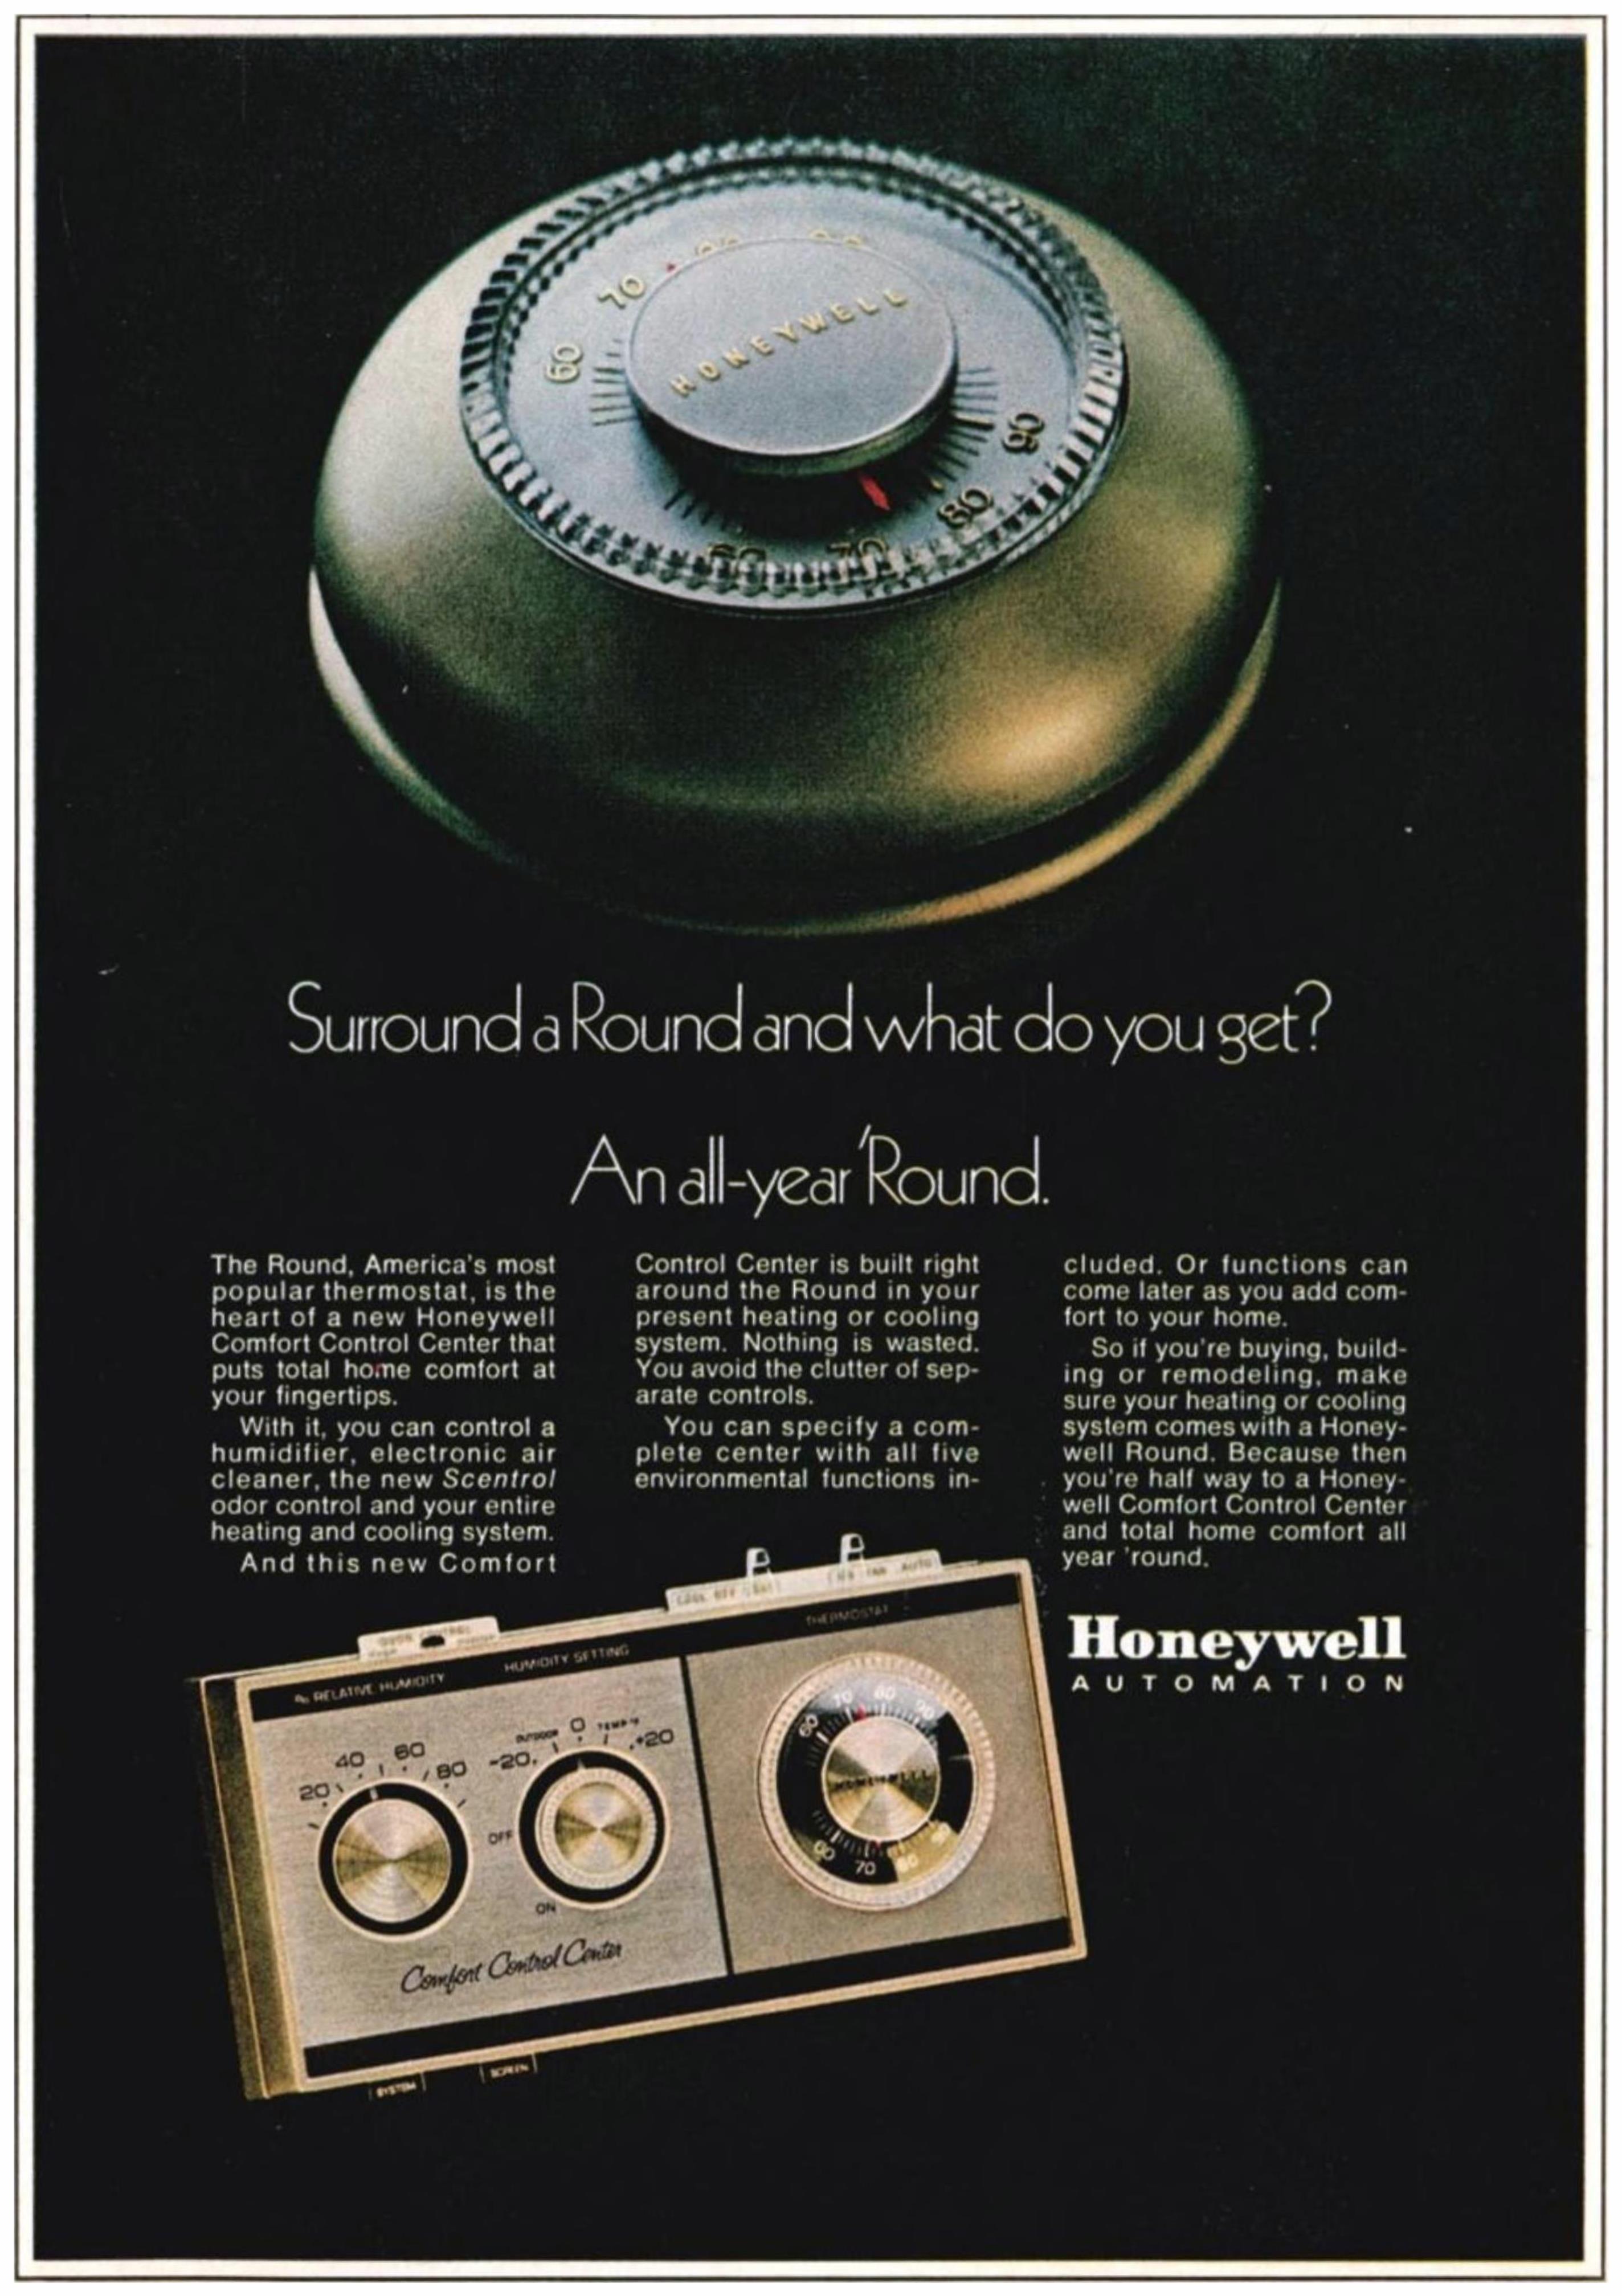 Honeywell 1970 1.jpg